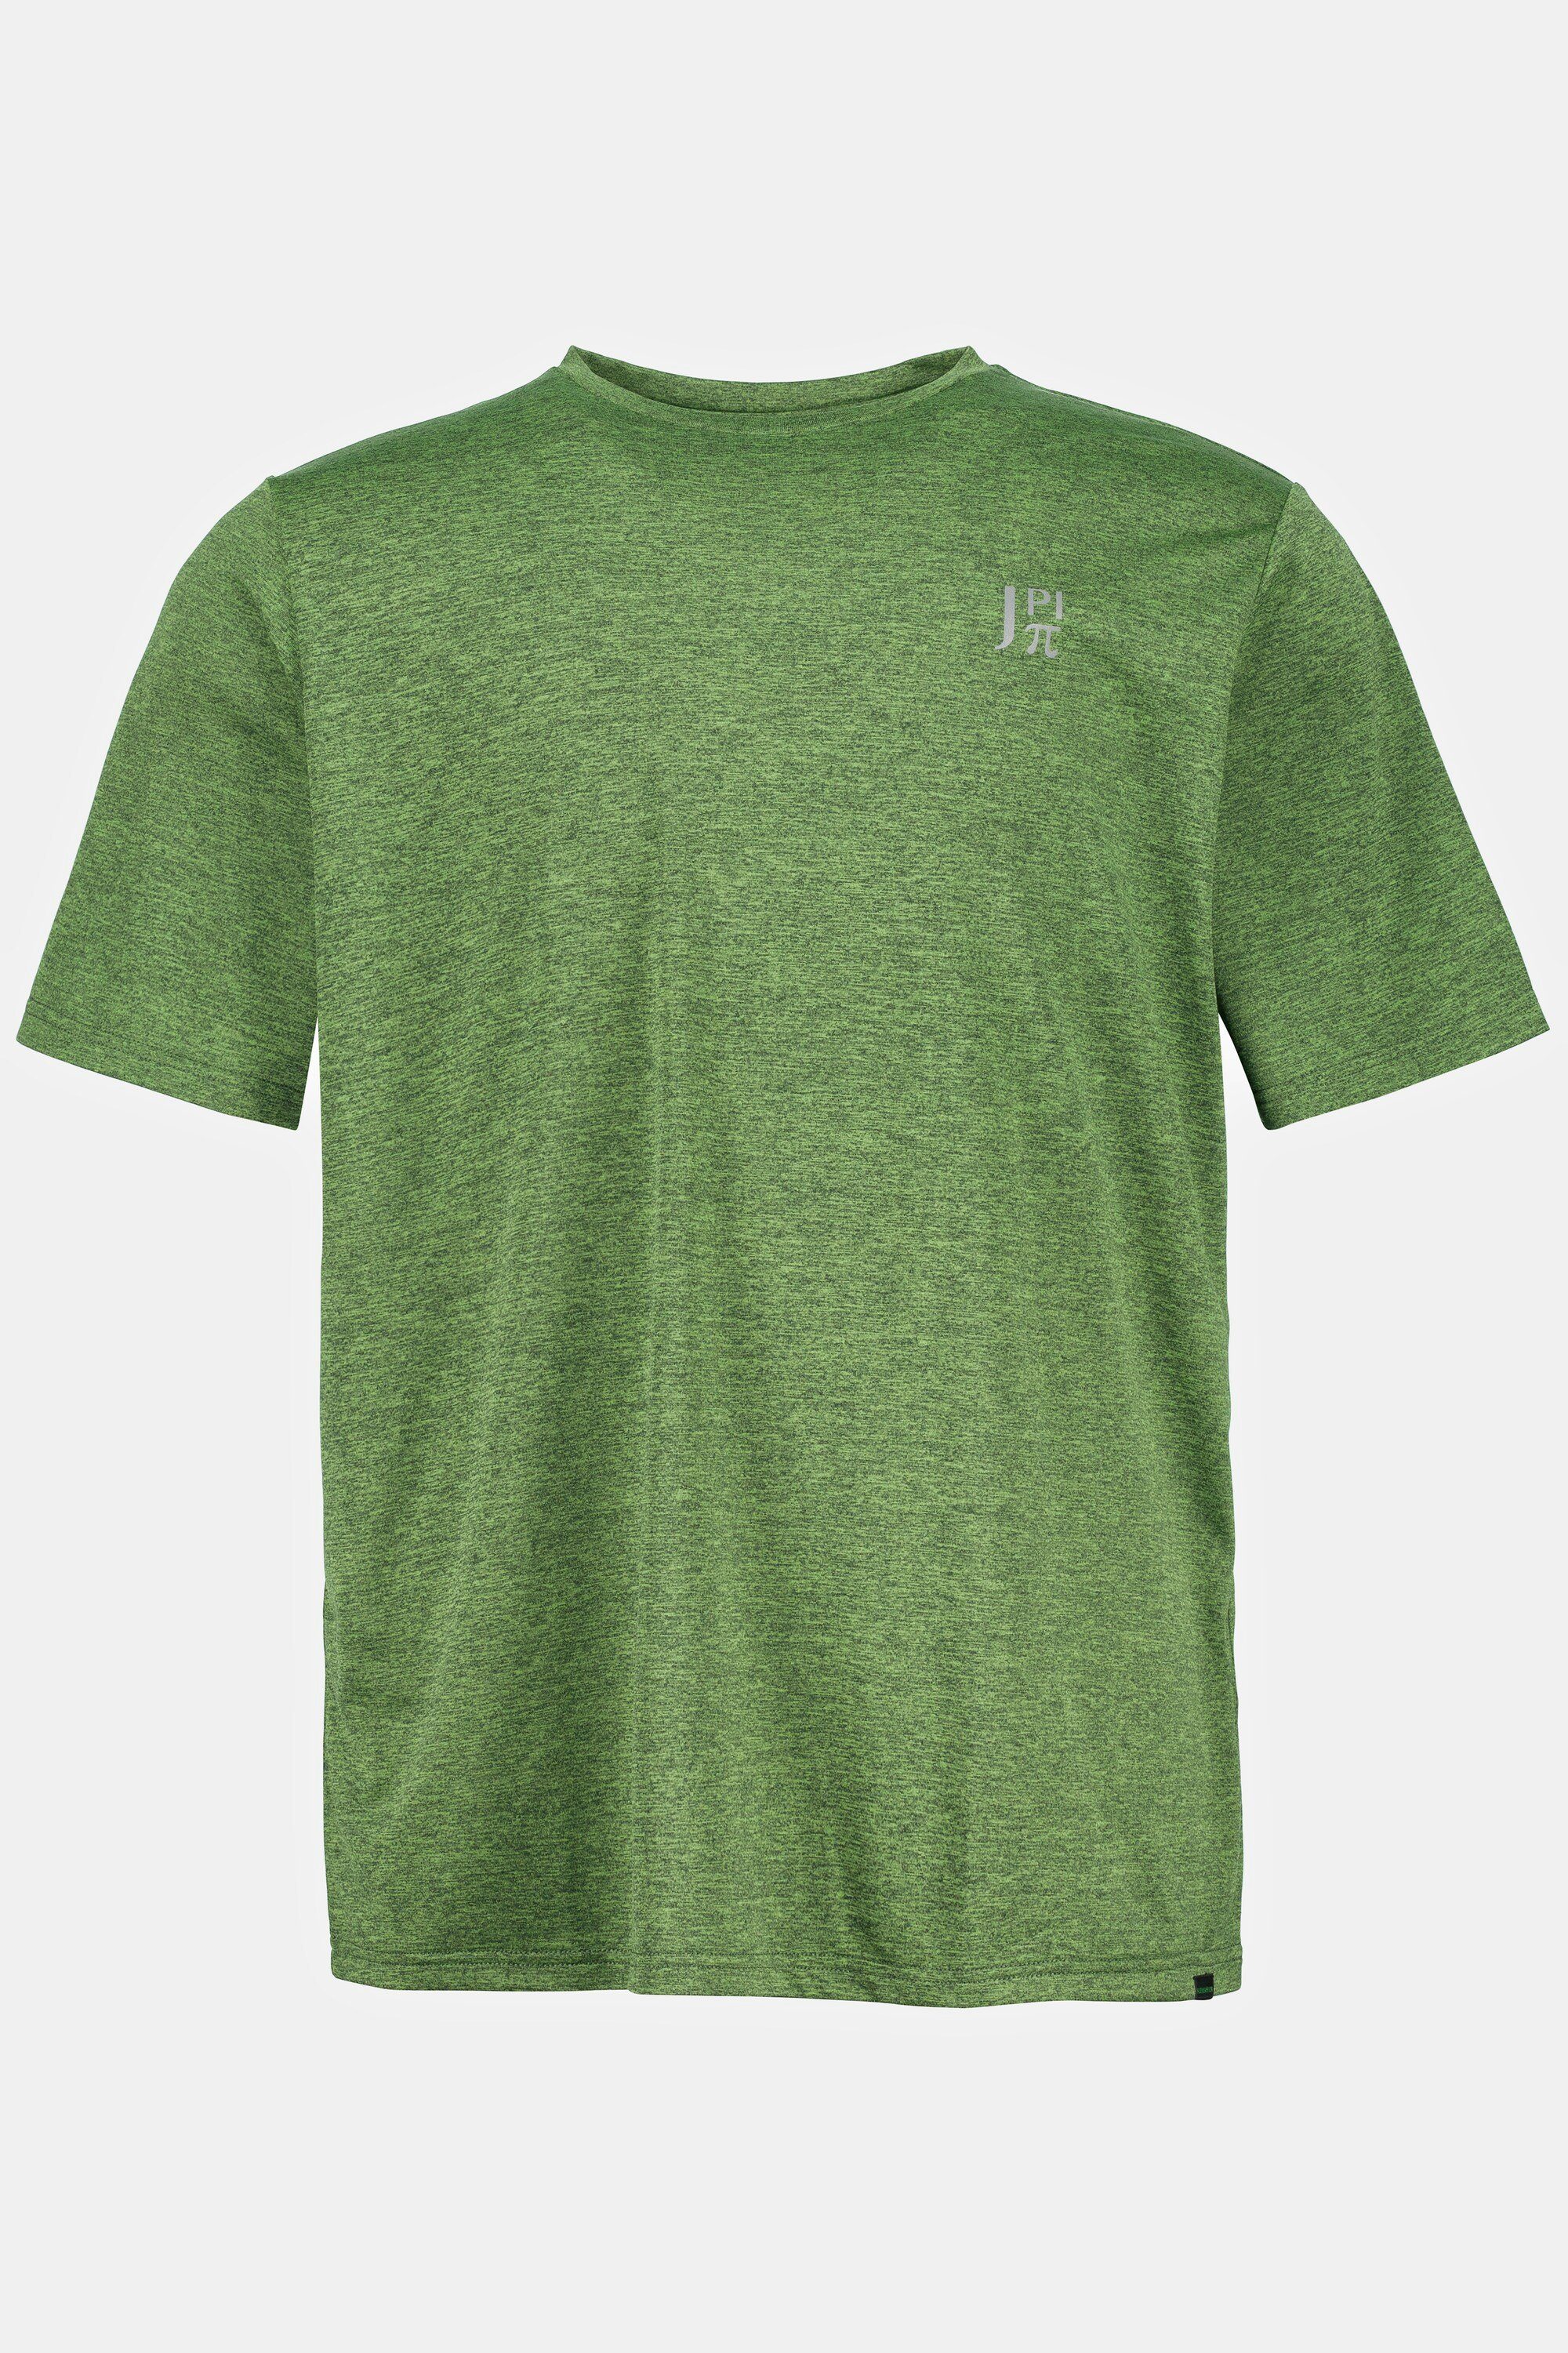 JP1880 T-Shirt Funktions-Shirt Halbarm oliv FLEXNAMIC® QuickDry